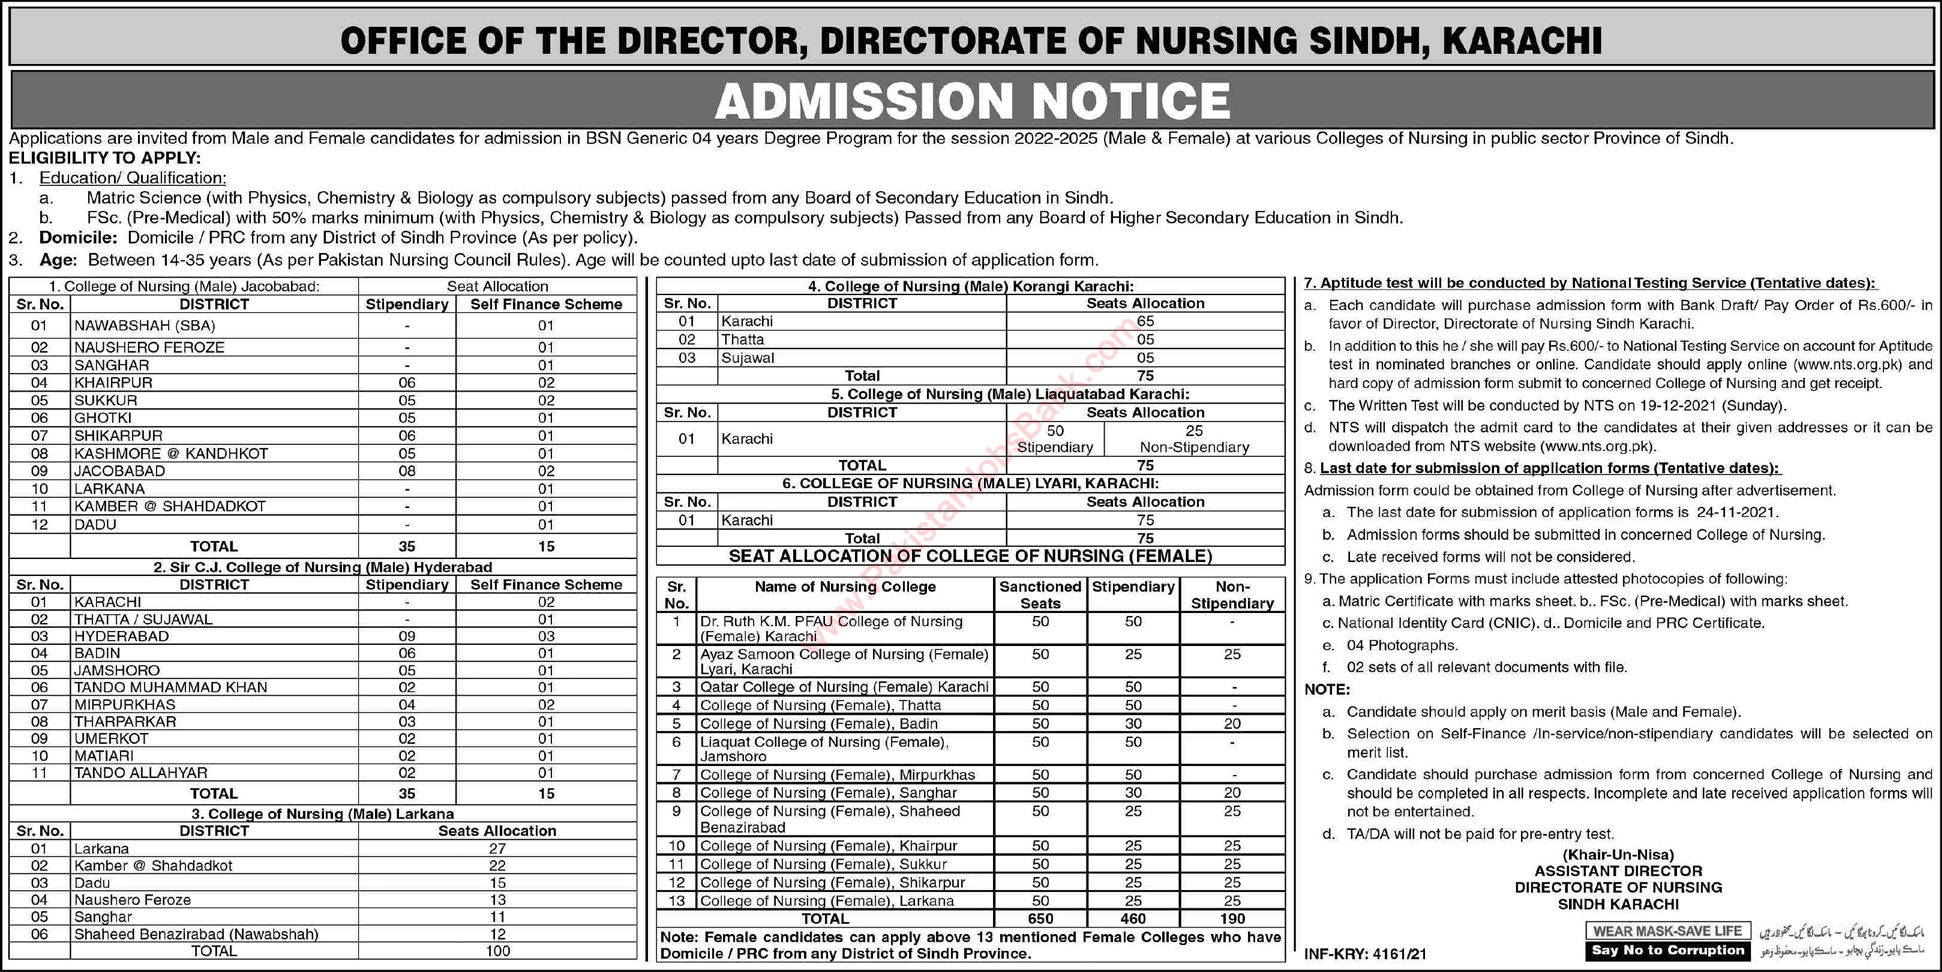 Free Nursing Courses in Directorate of Nursing Sindh November 2021 4 Years BSc Nursing Degree Program Latest